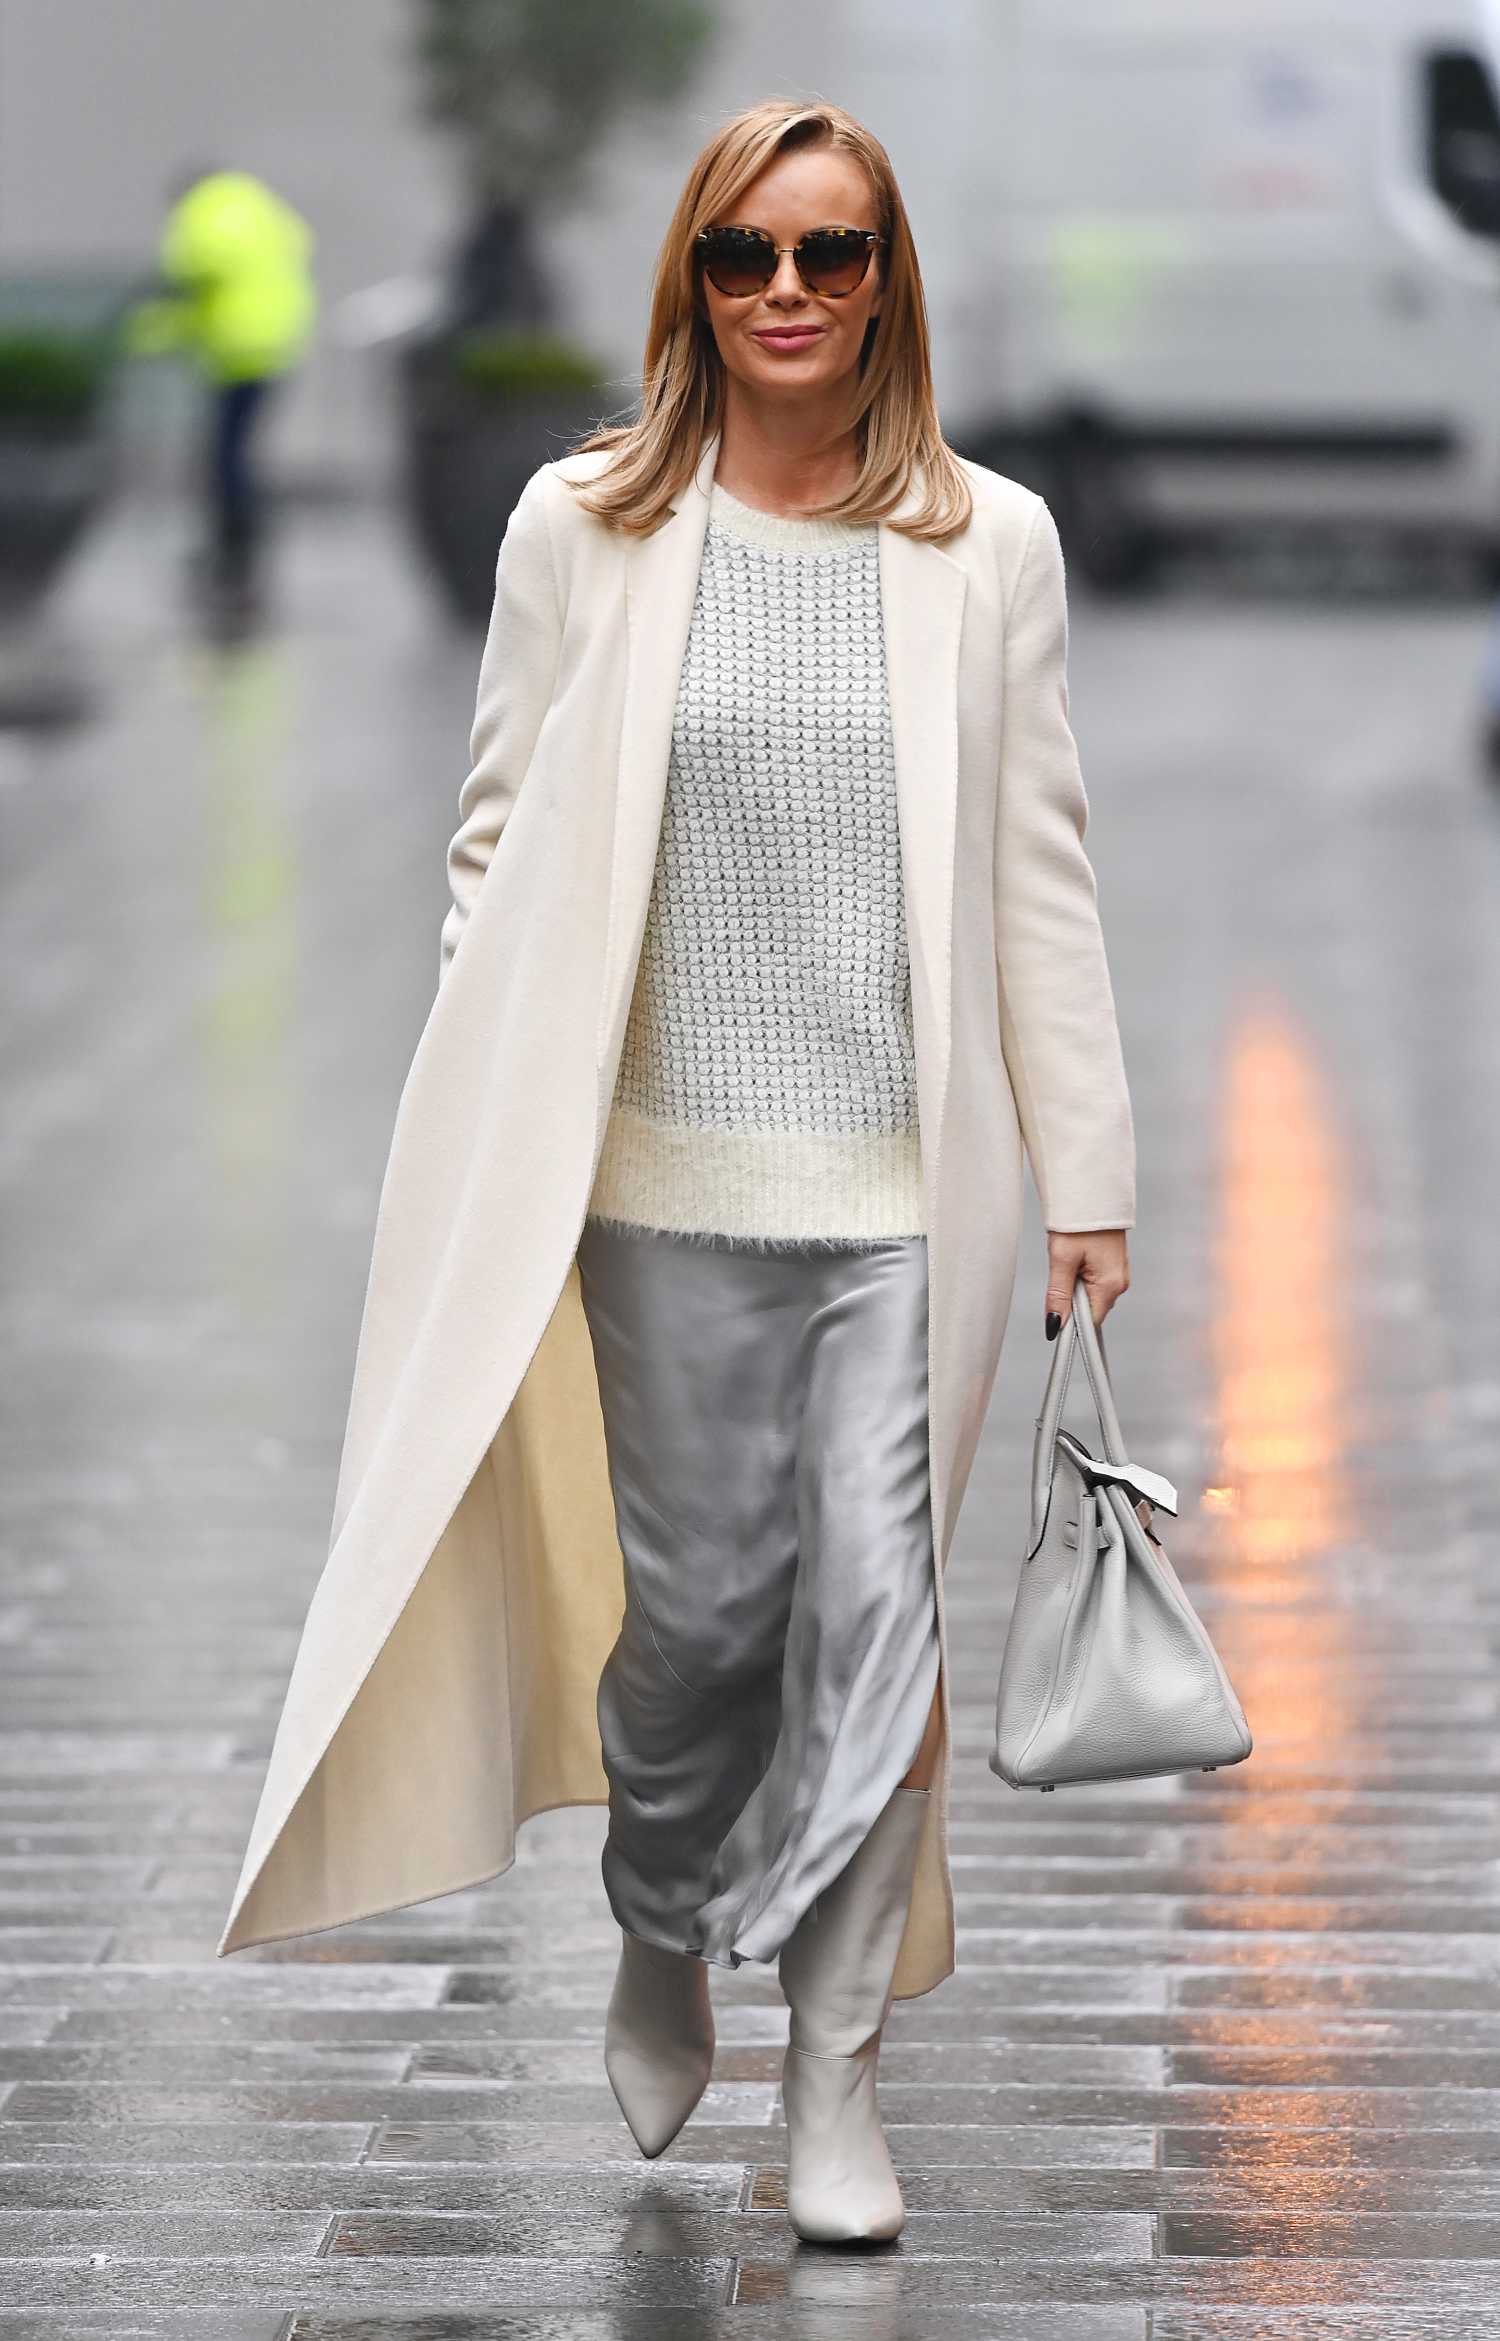 Amanda Holden in a White Coat Leaves the Global Studios in London ...